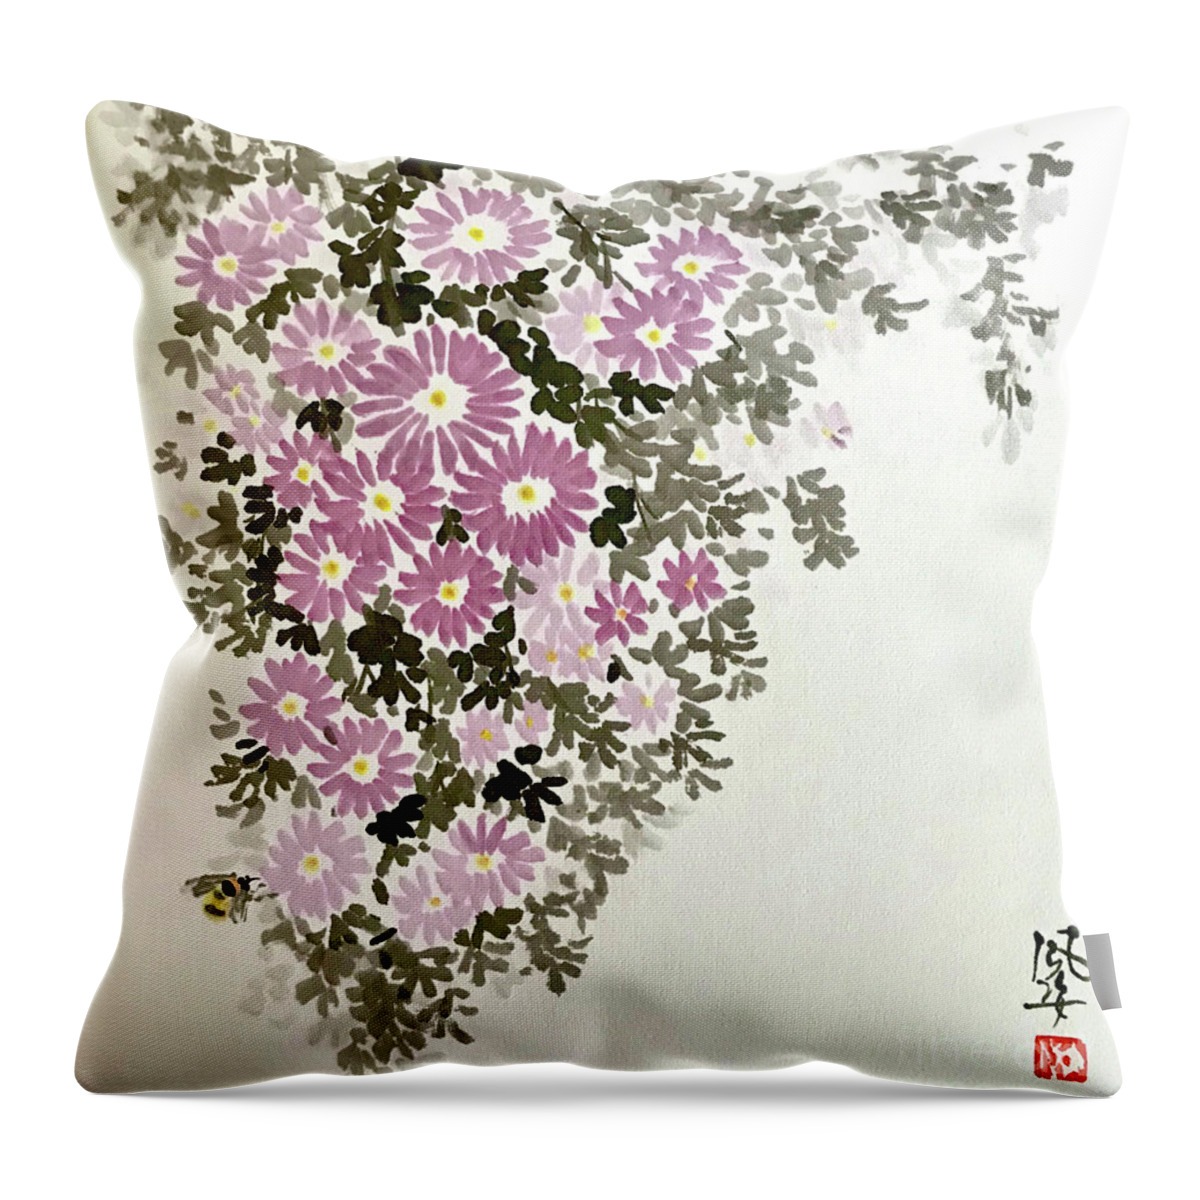 Japanese Throw Pillow featuring the painting Spring Joy by Fumiyo Yoshikawa